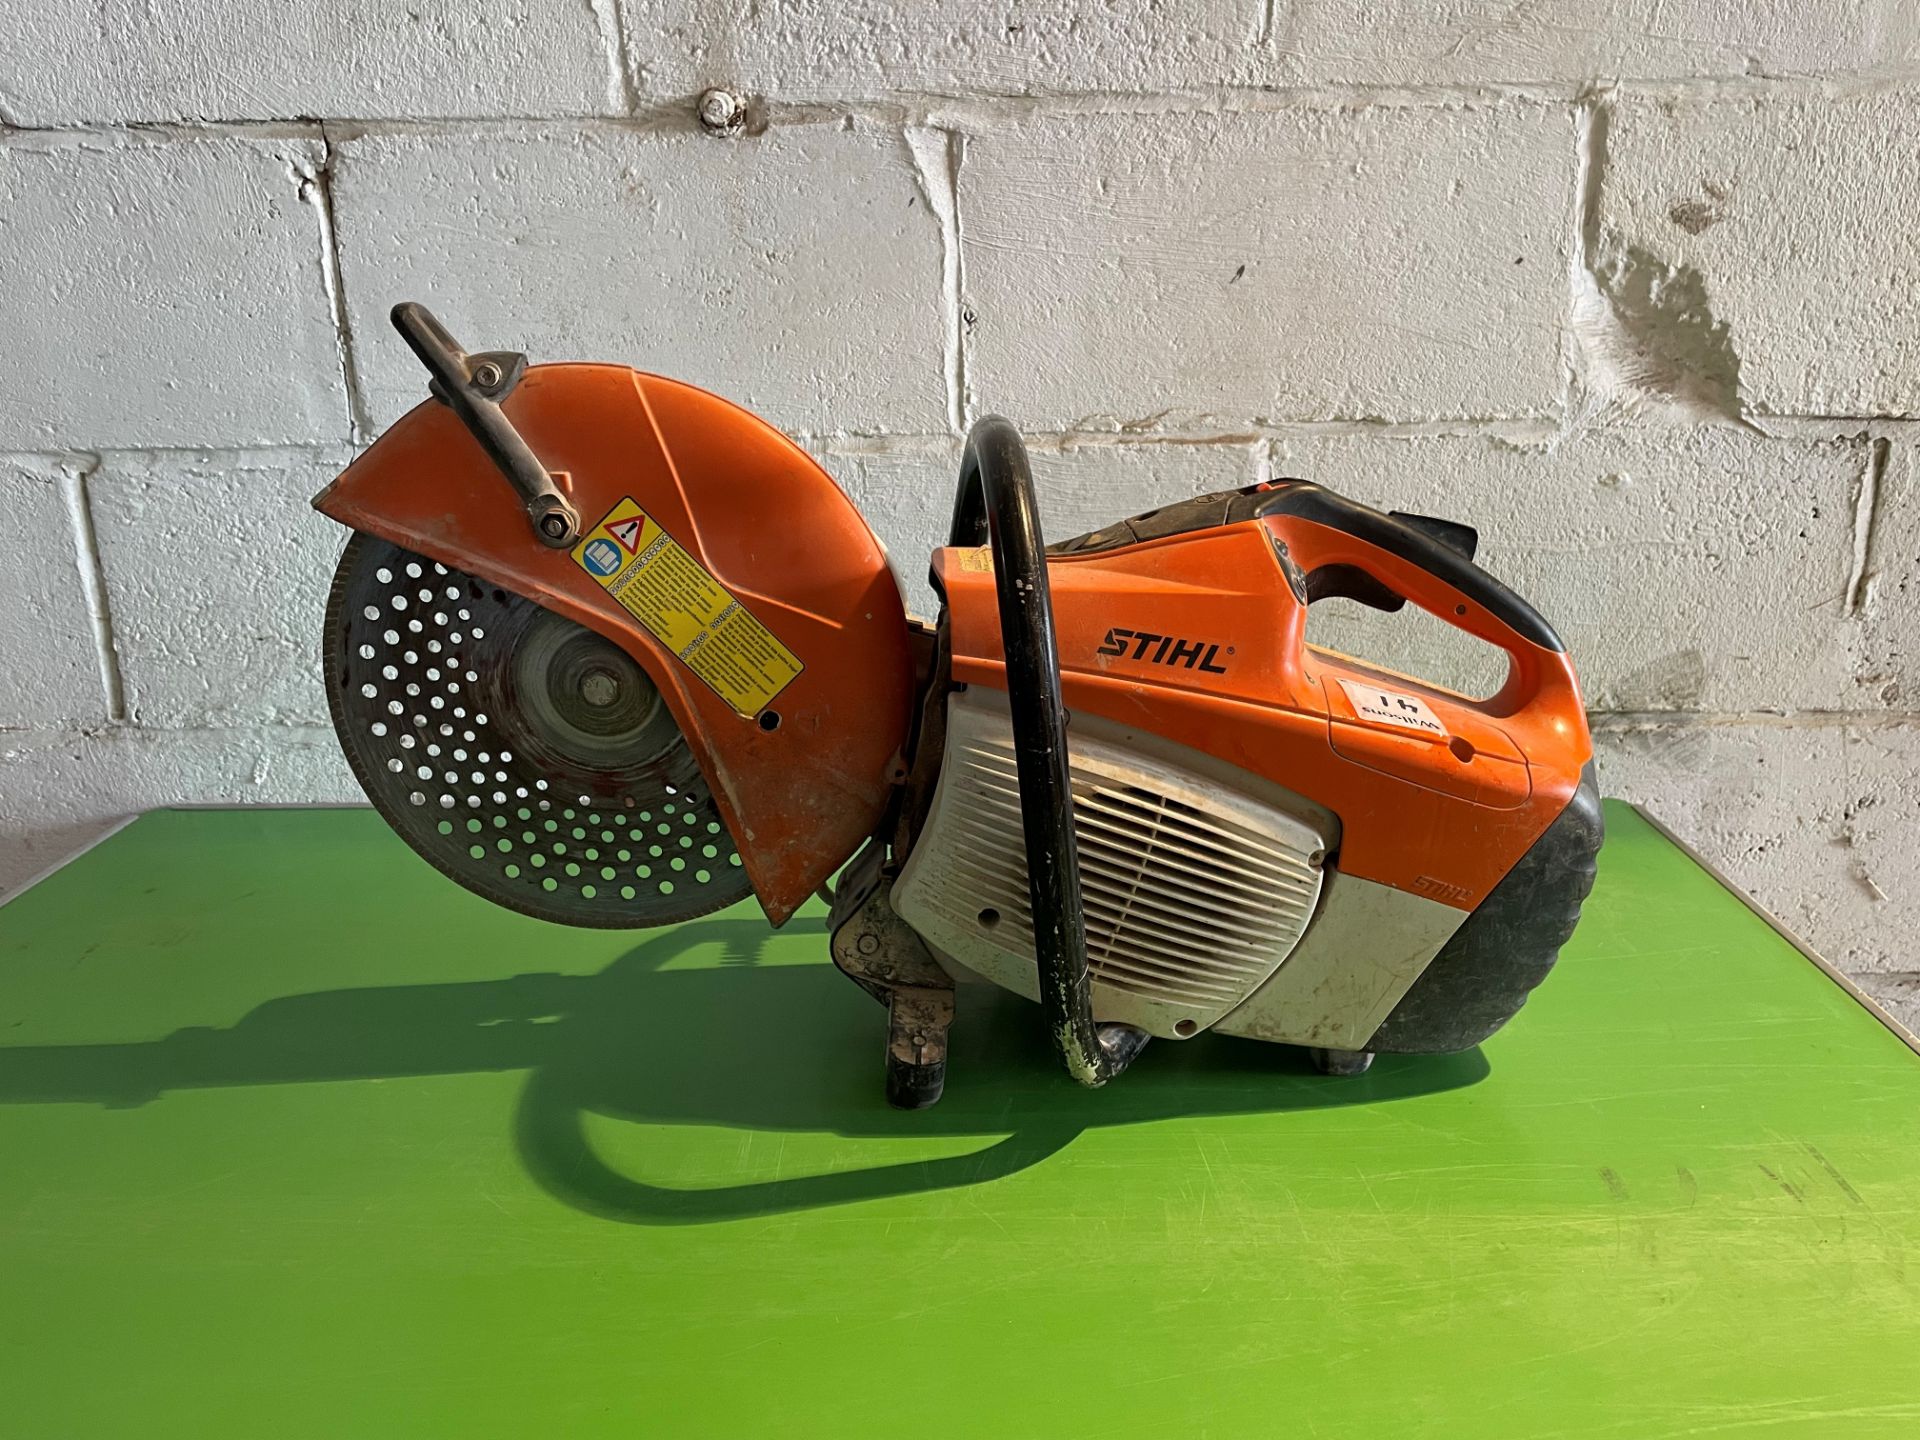 Stihl petrol engine model TS480i disc cutter with helmet